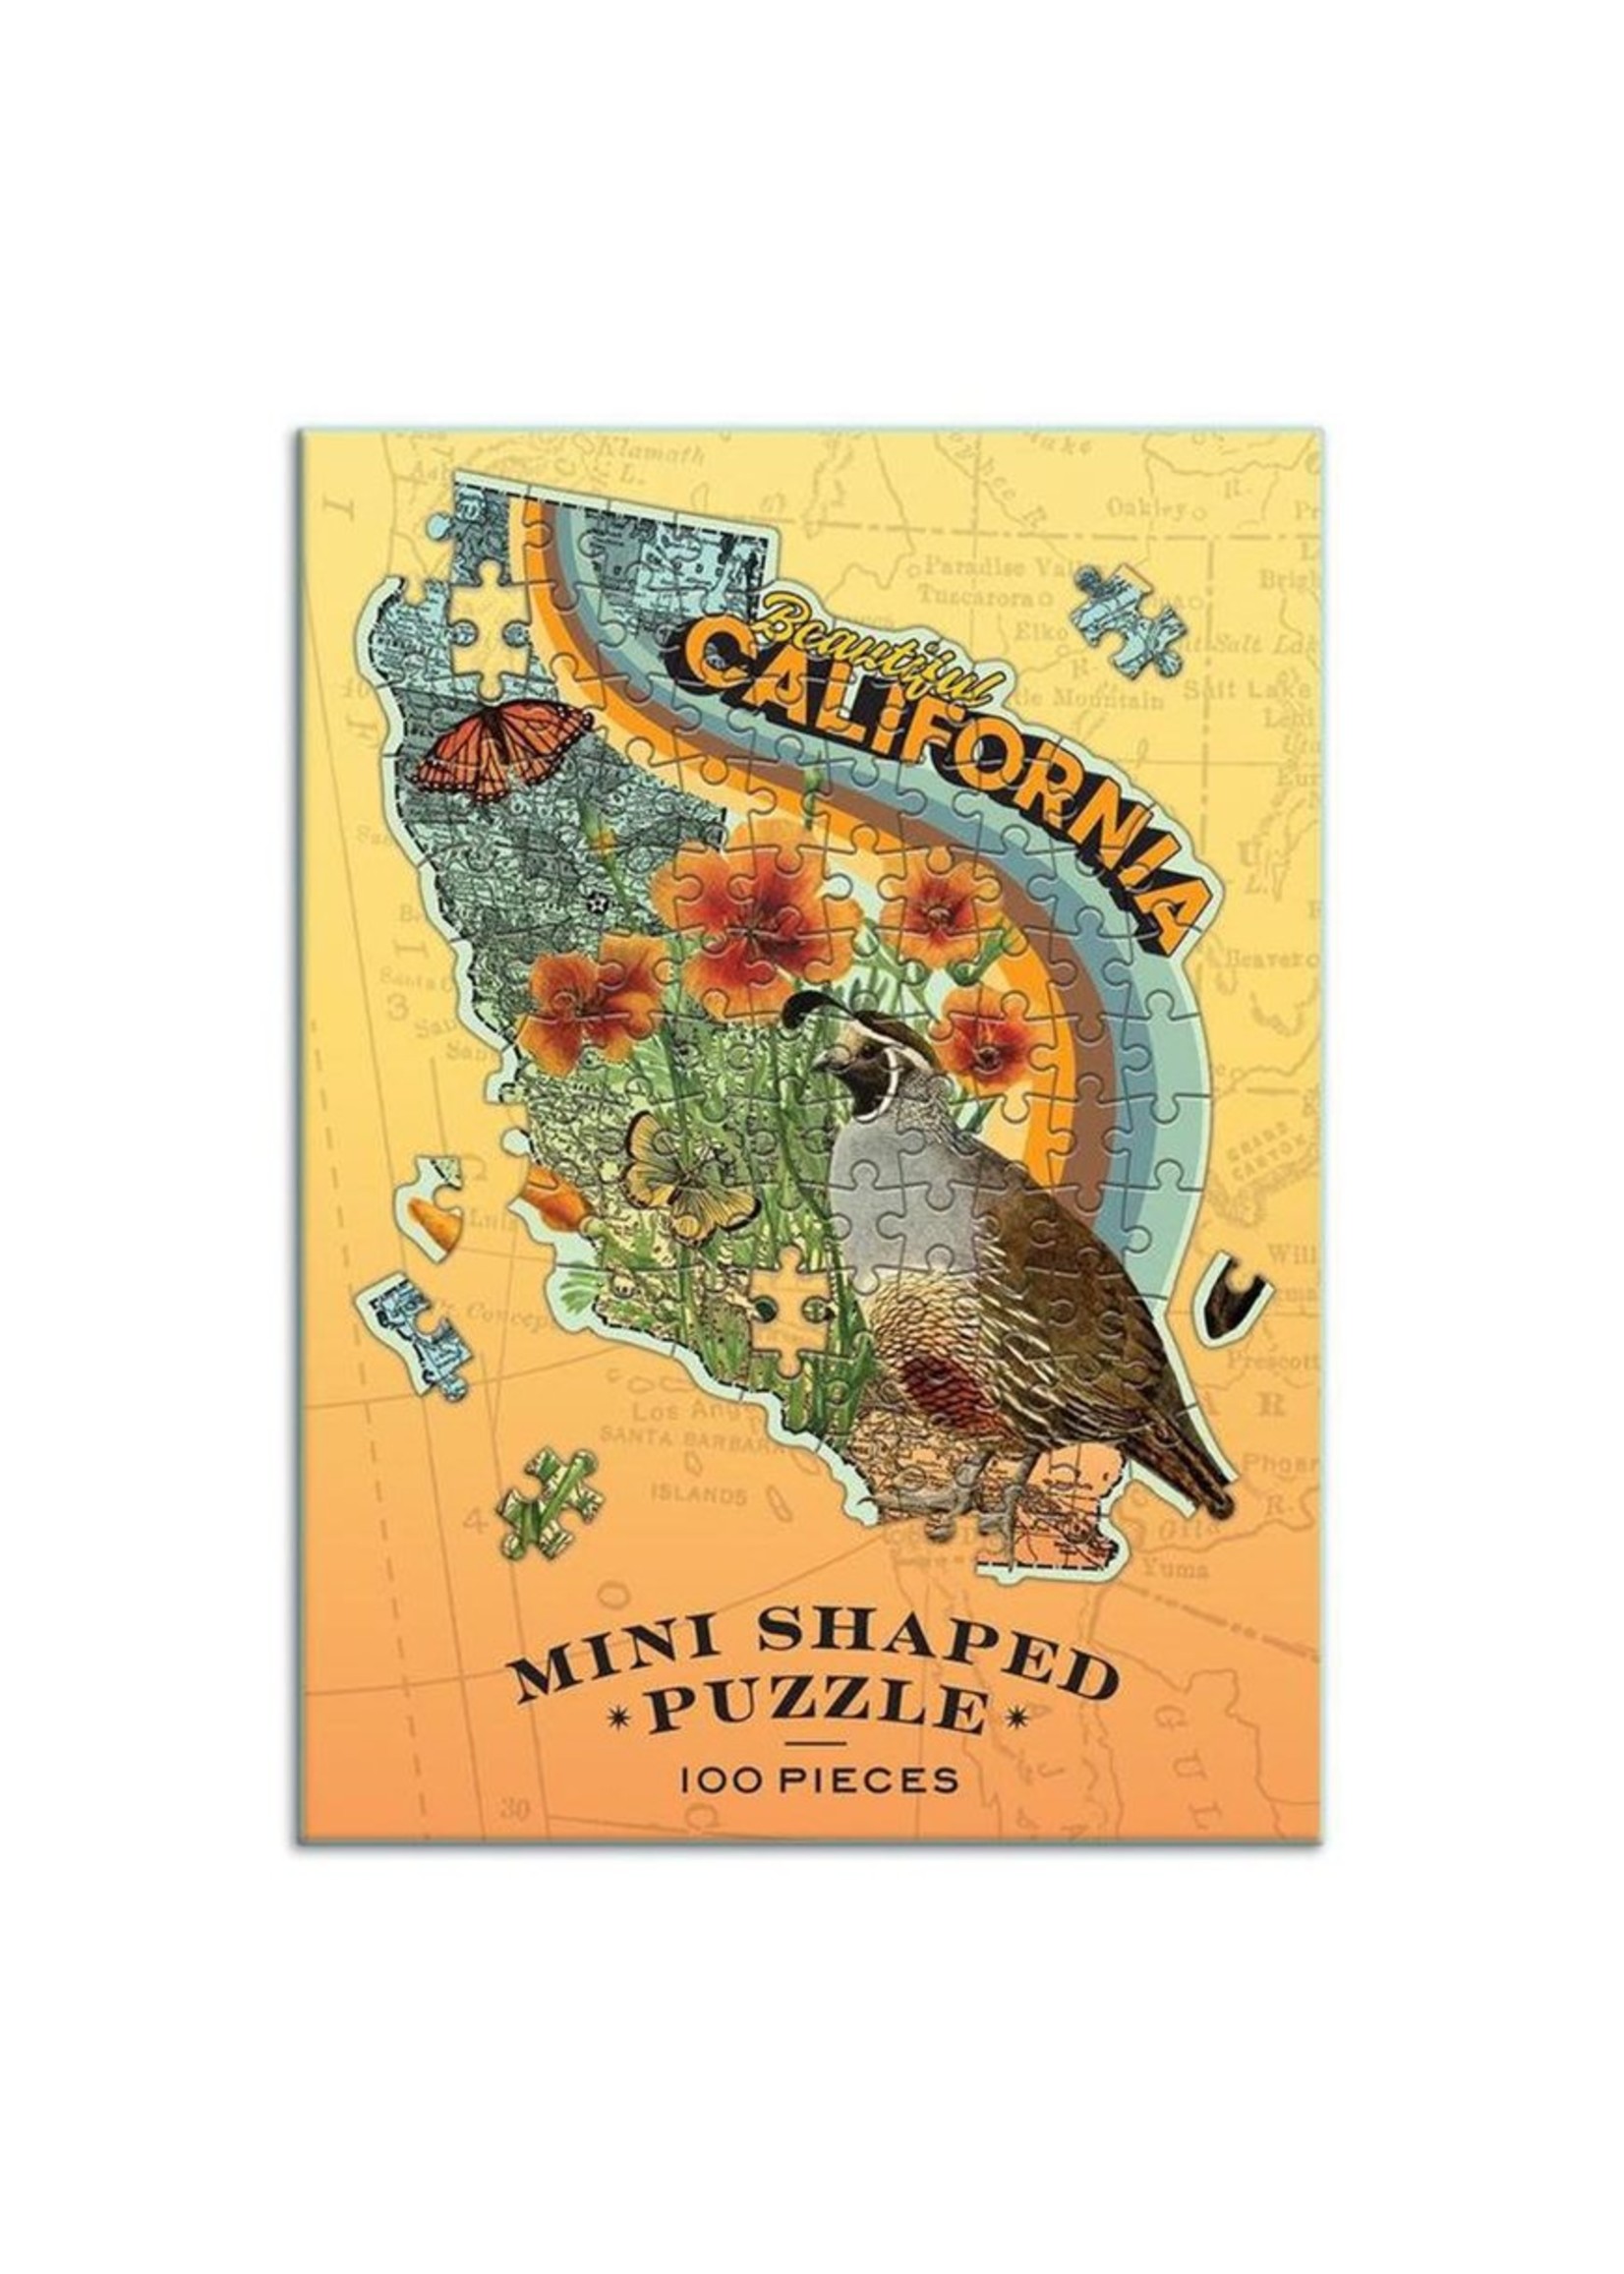 Galison "Beautiful California" 100 Piece Mini Shaped Puzzle